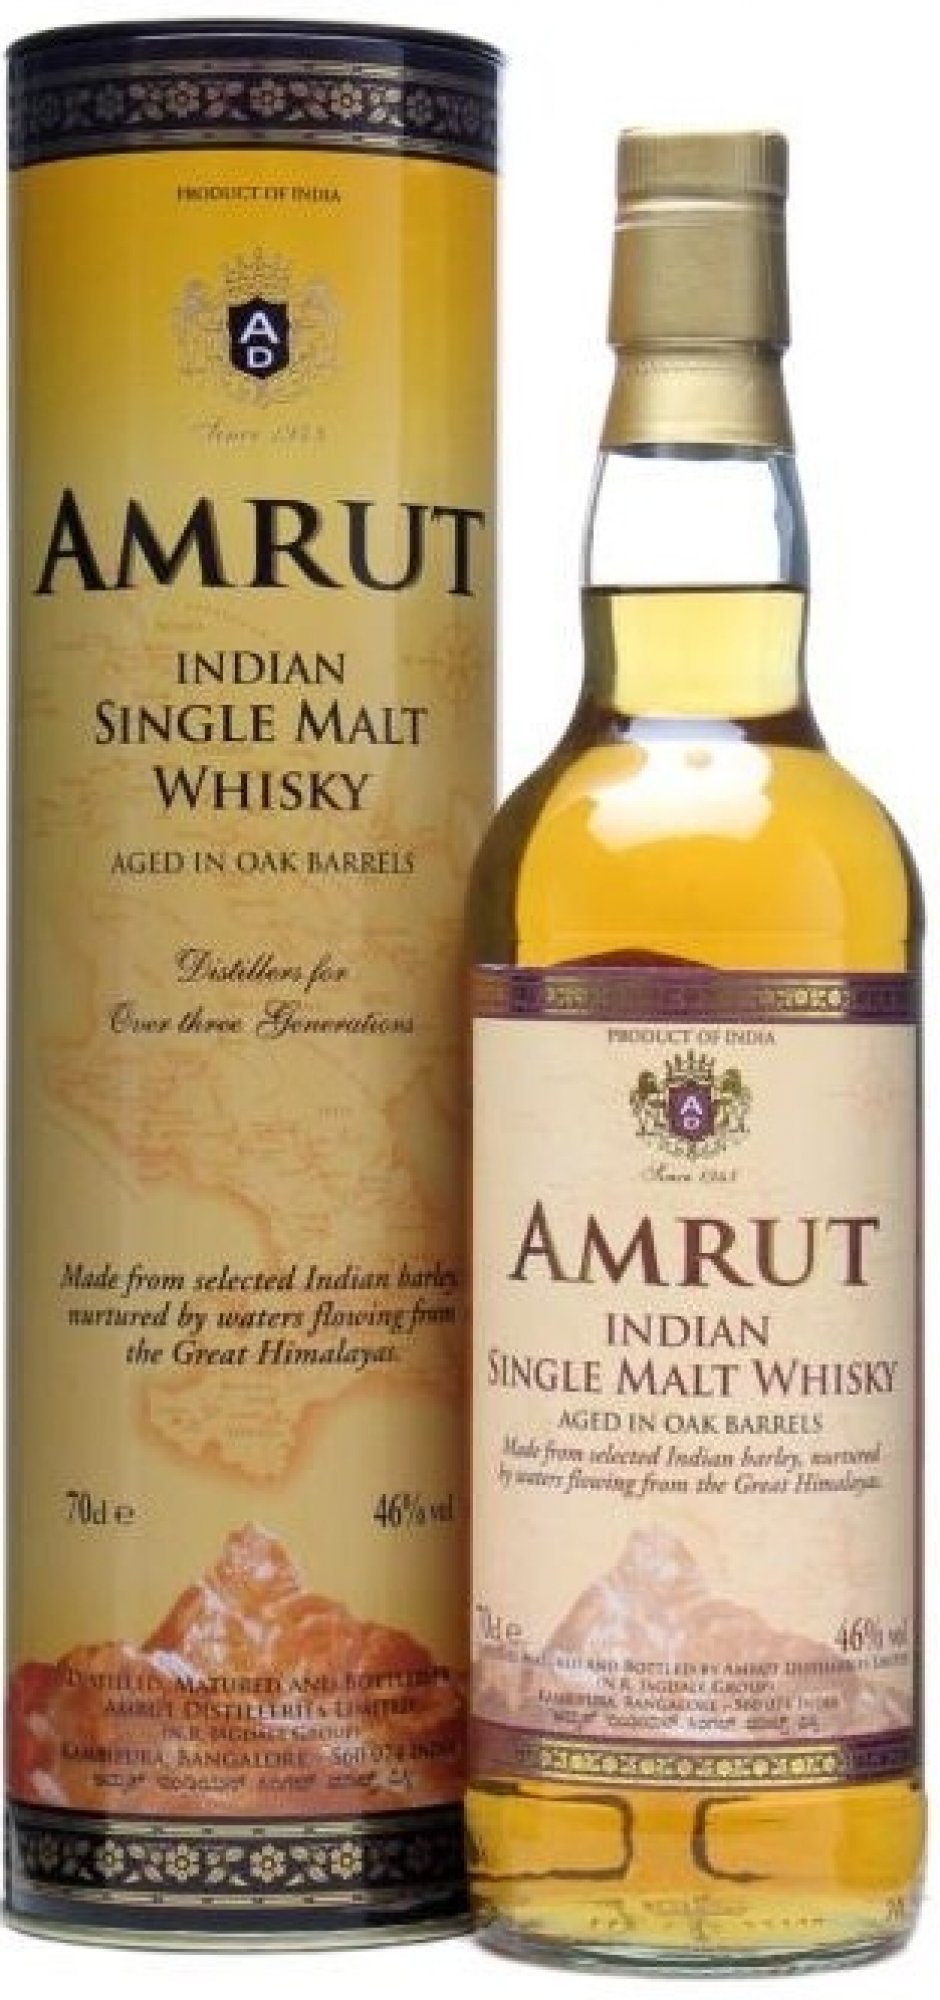 Amrut Indian Single malt 46% 0,7l